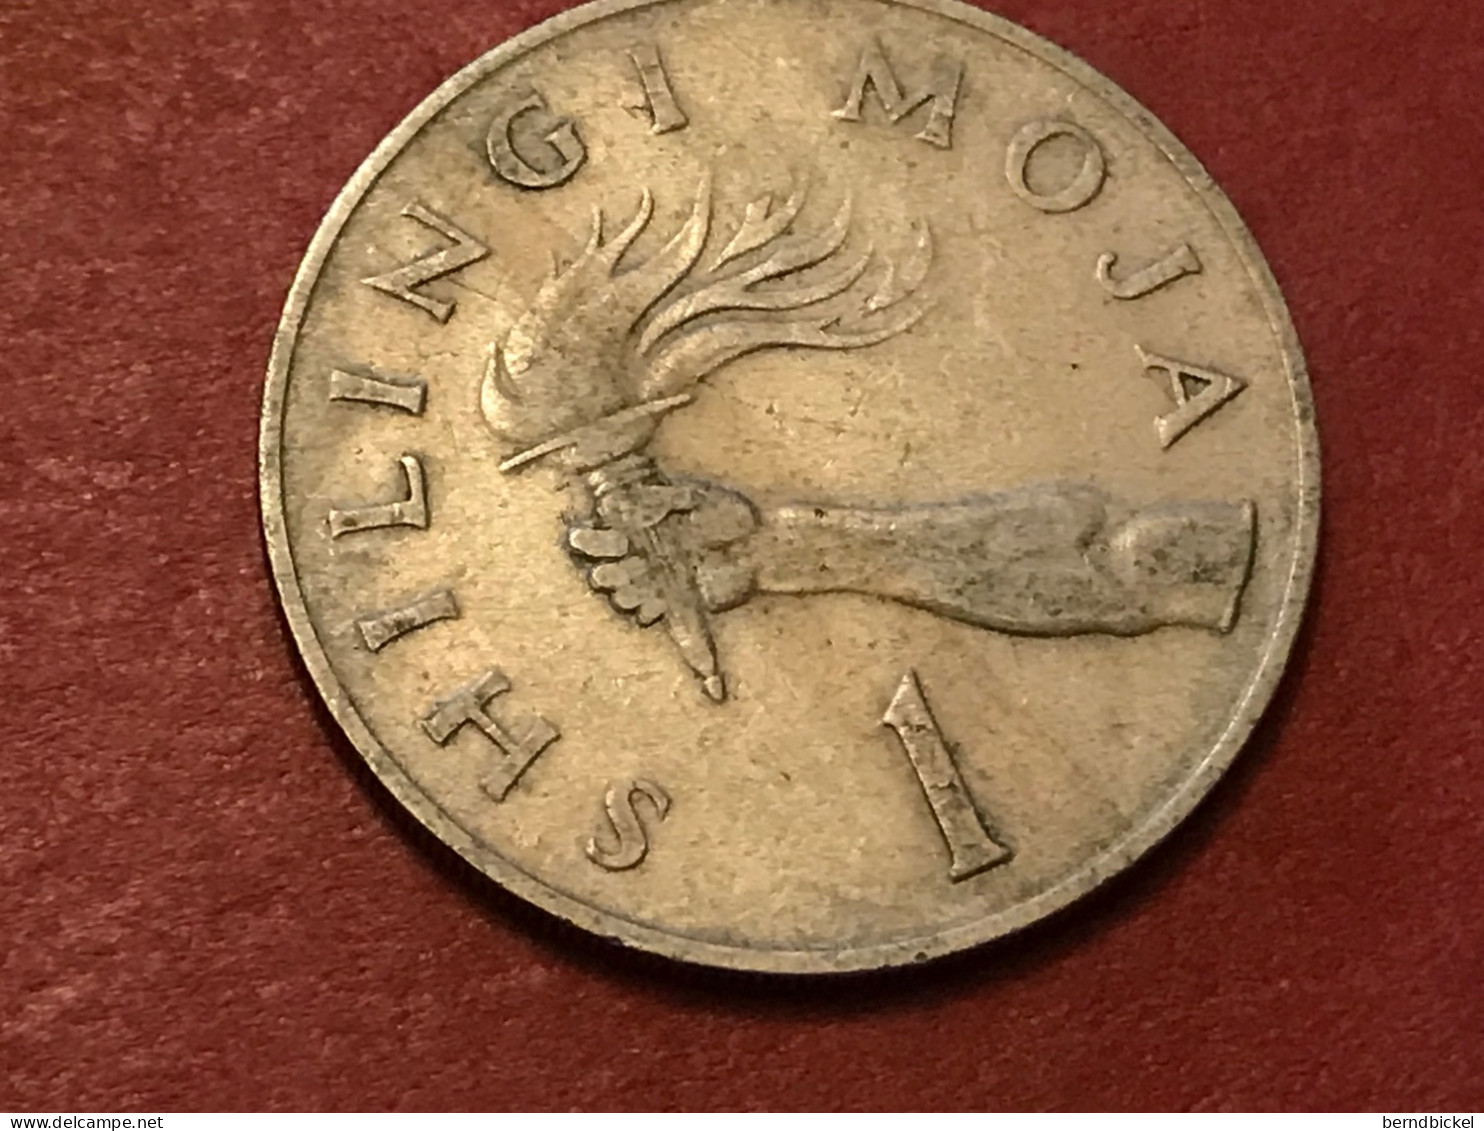 Münze Münzen Umlaufmünze Tansania 1 Shilling 1966 - Tansania